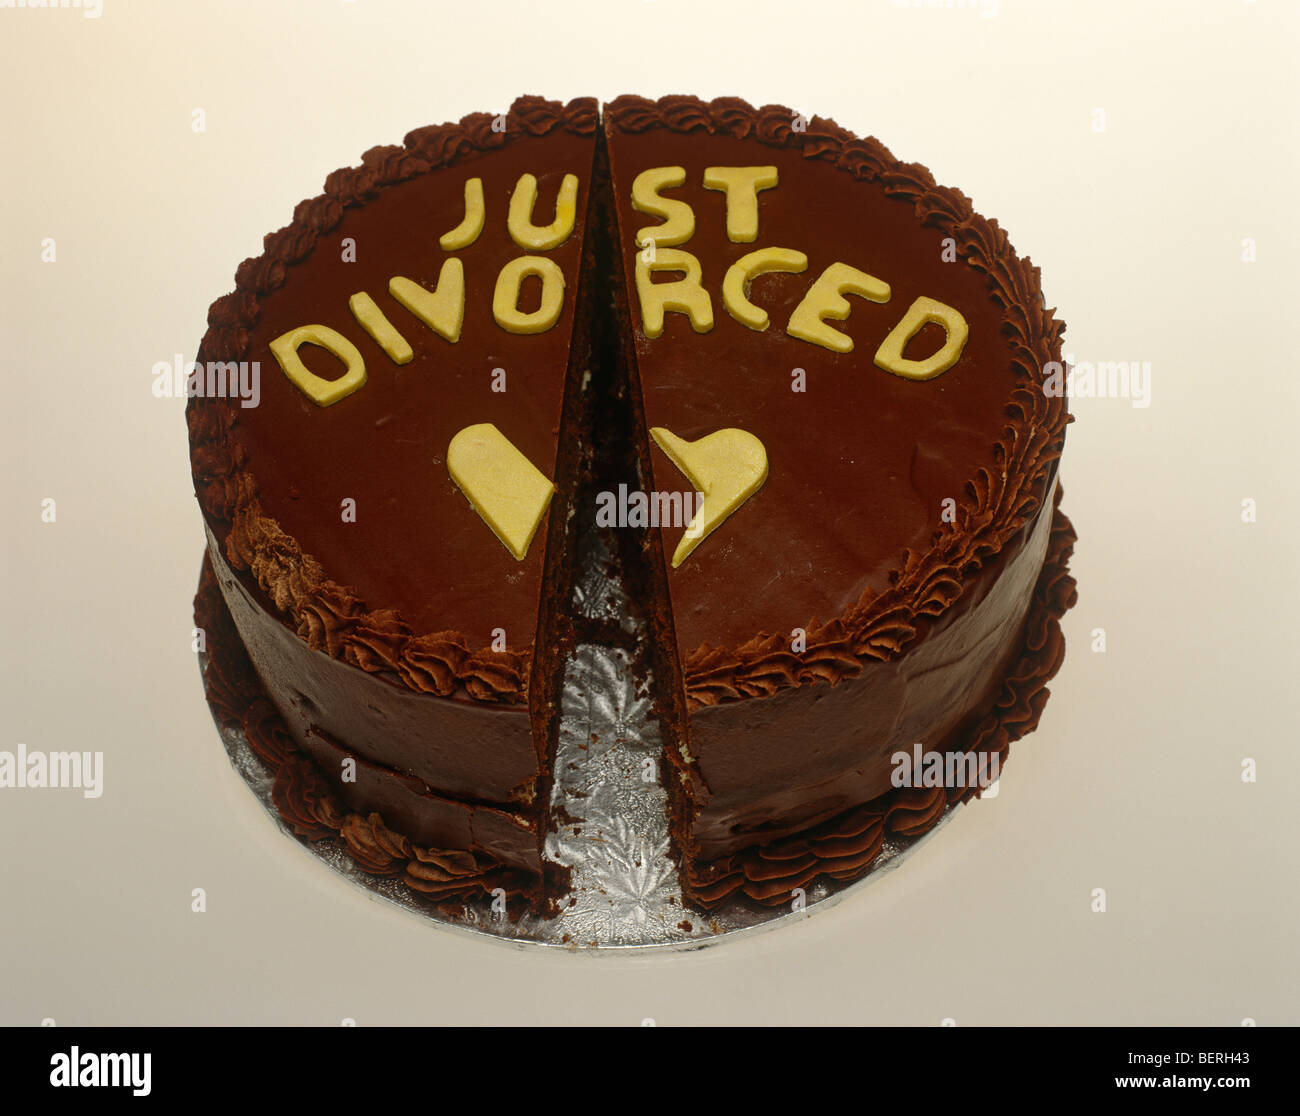 Chocolate cake 'Just divorced' Stock Photo